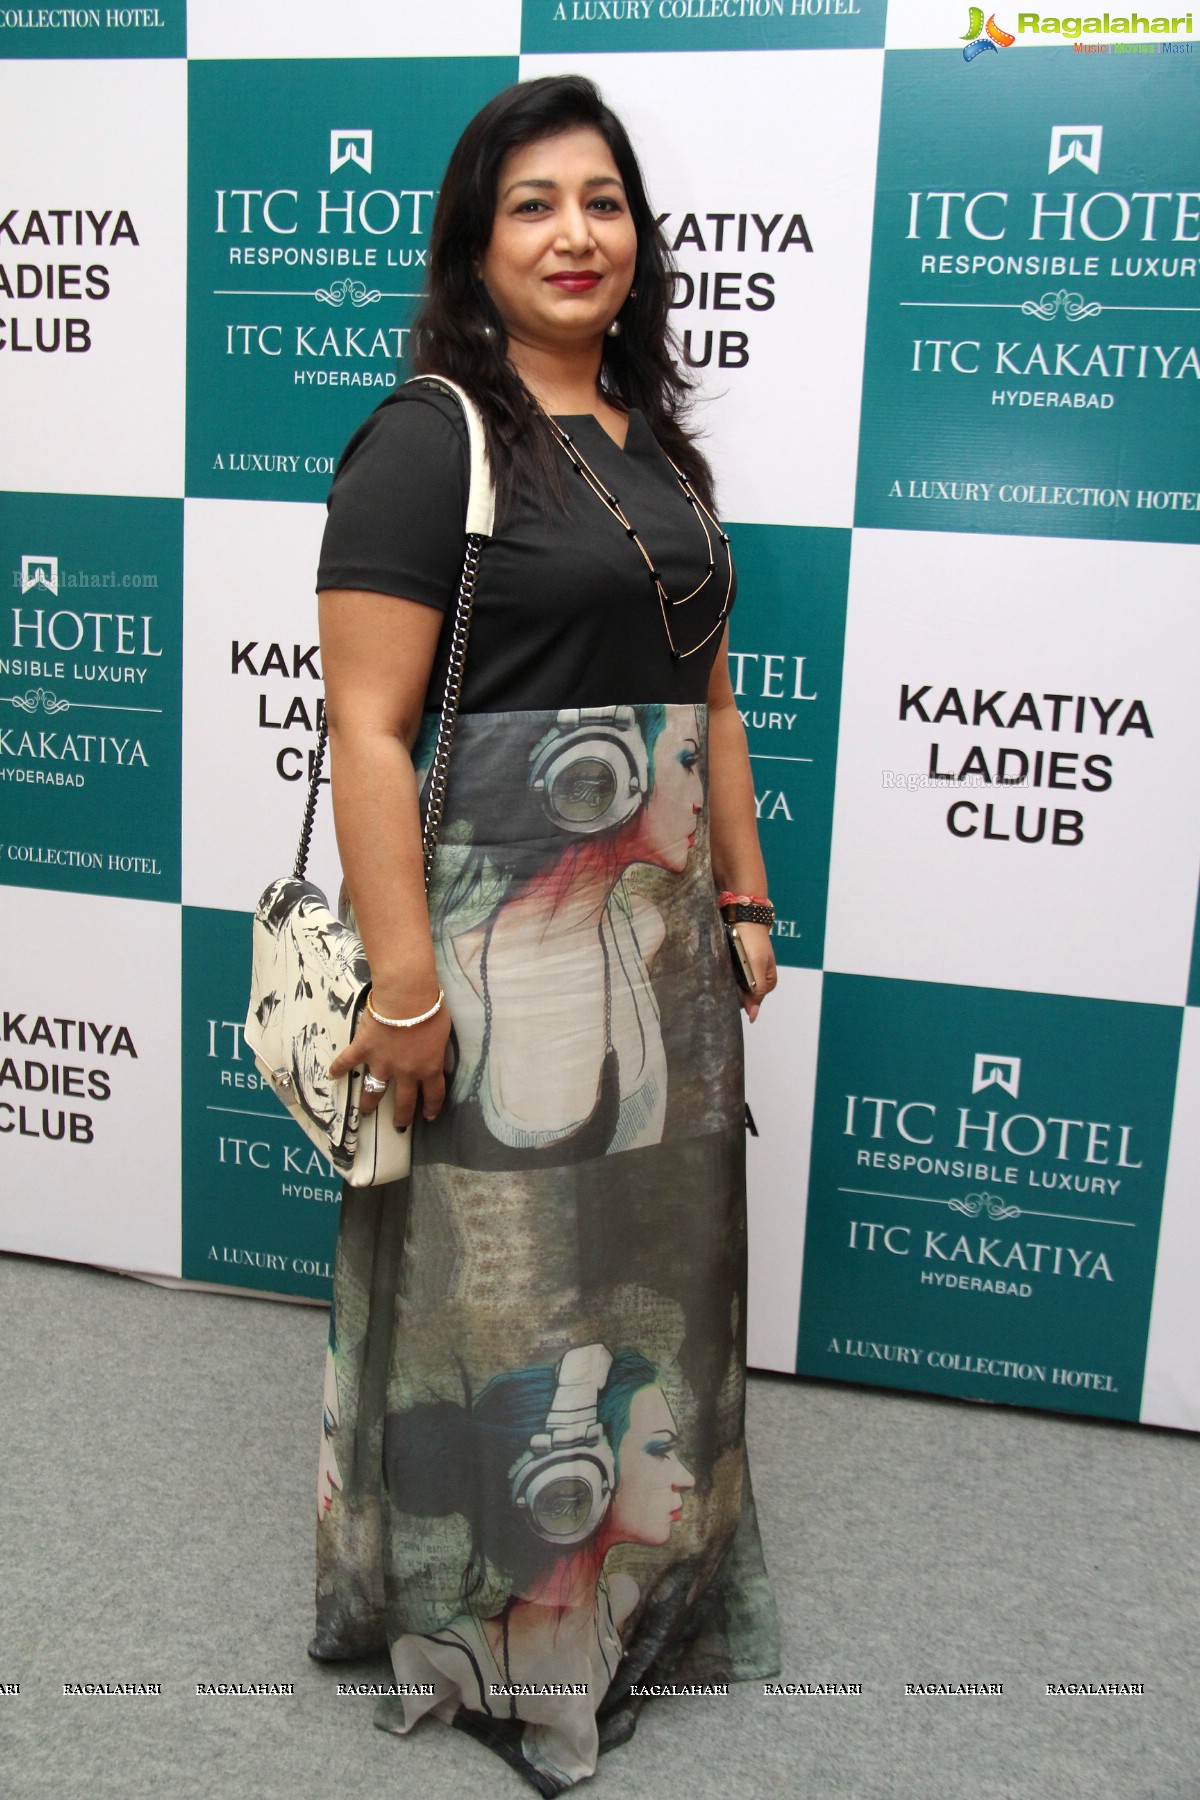 Kakatiya Ladies Club Event (Jan. 2016) at ITC Kakatiya, Hyderabad